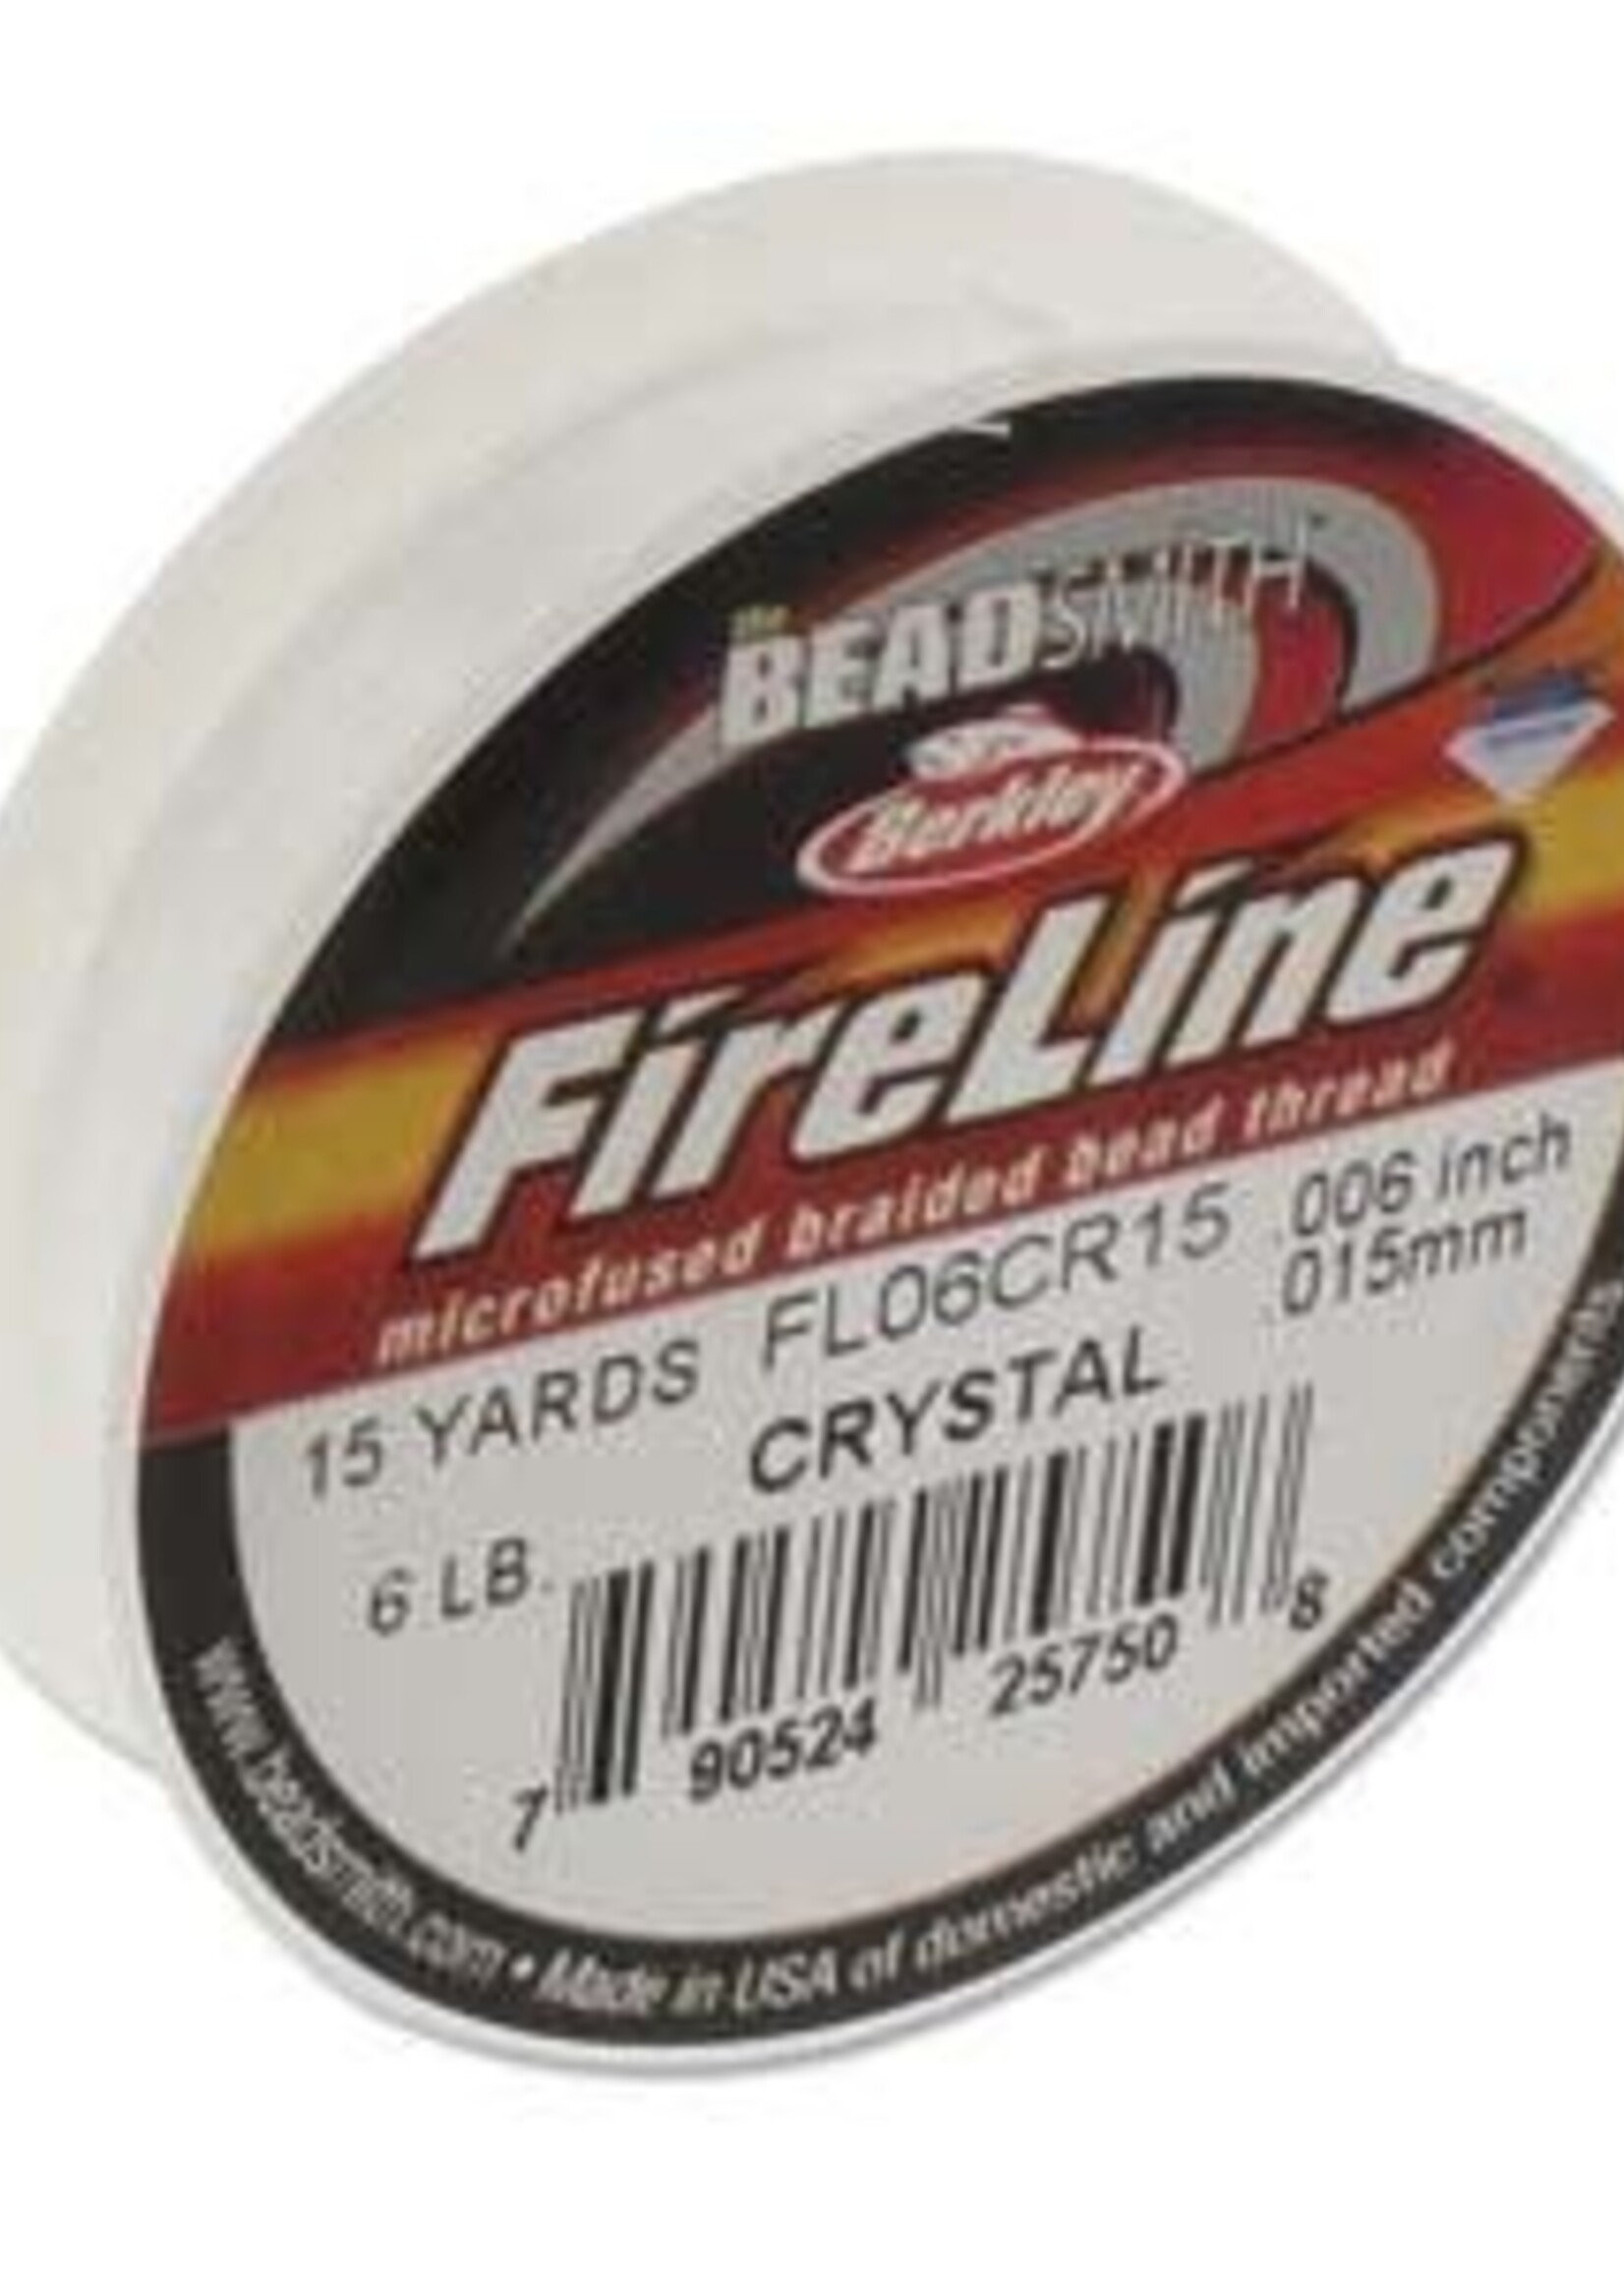 FireLine 6lb Crystal 15 yards